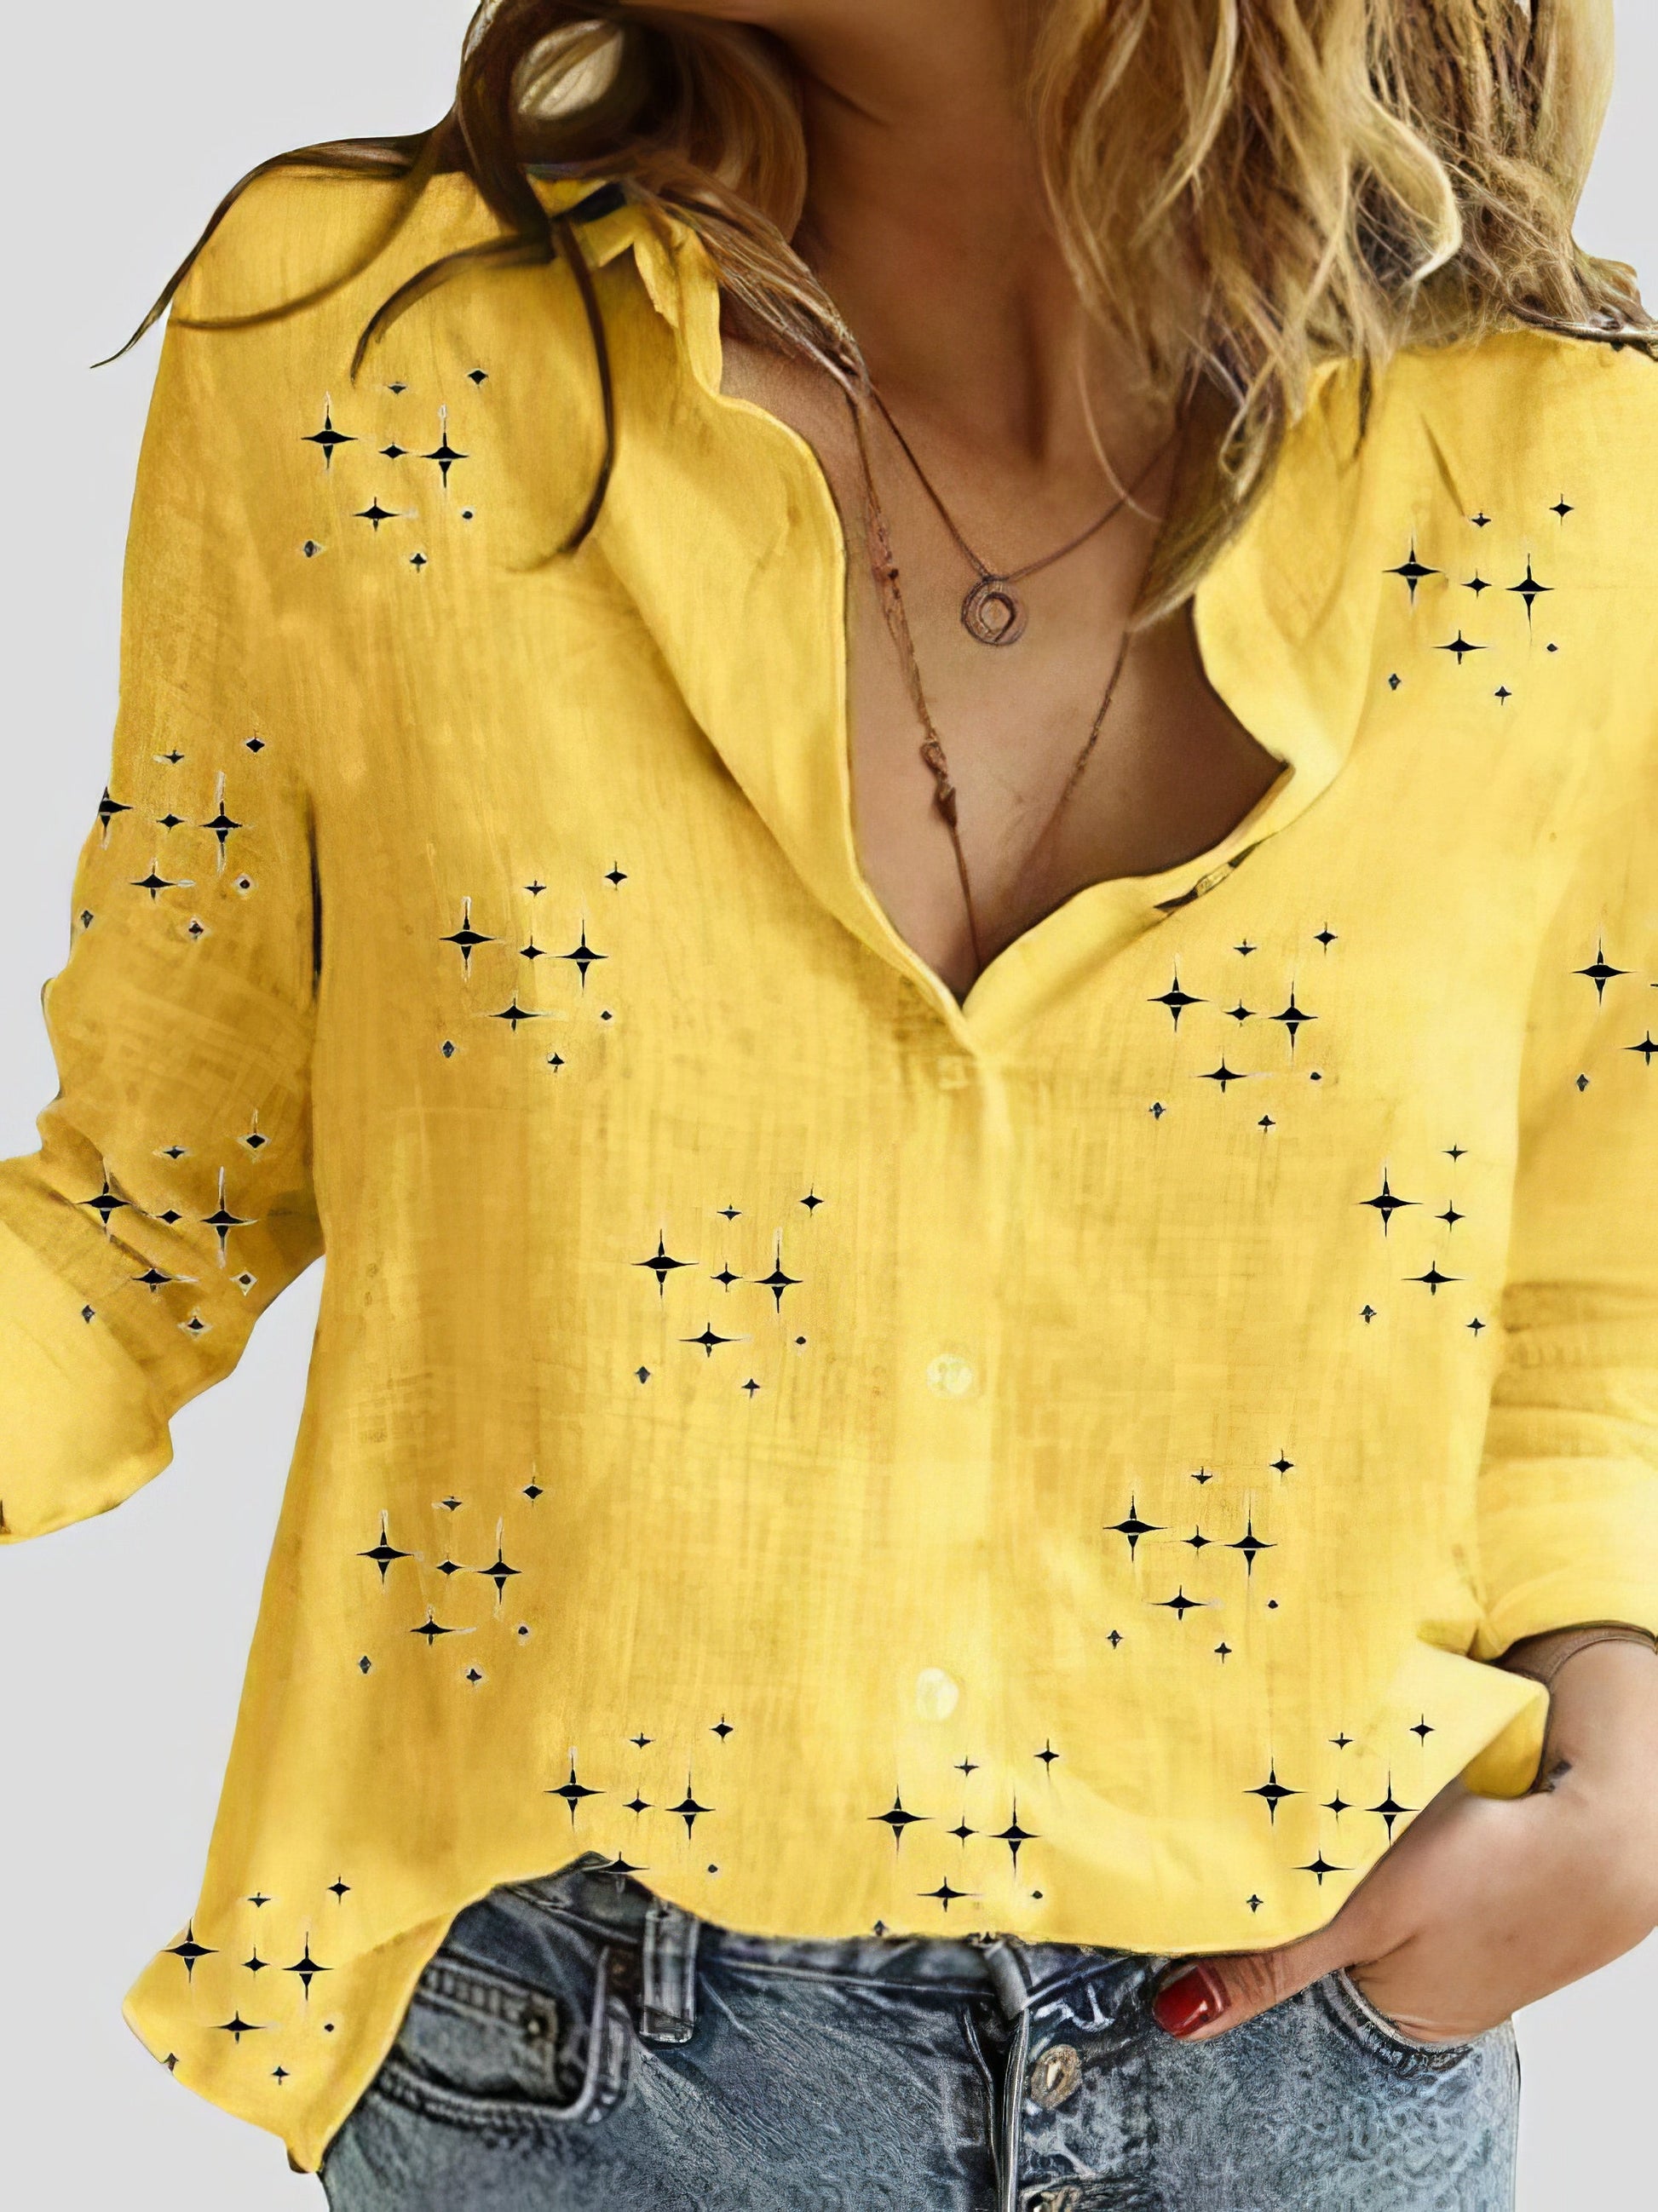 Blouses - Star Print Button Long Sleeve Blouses - MsDressly